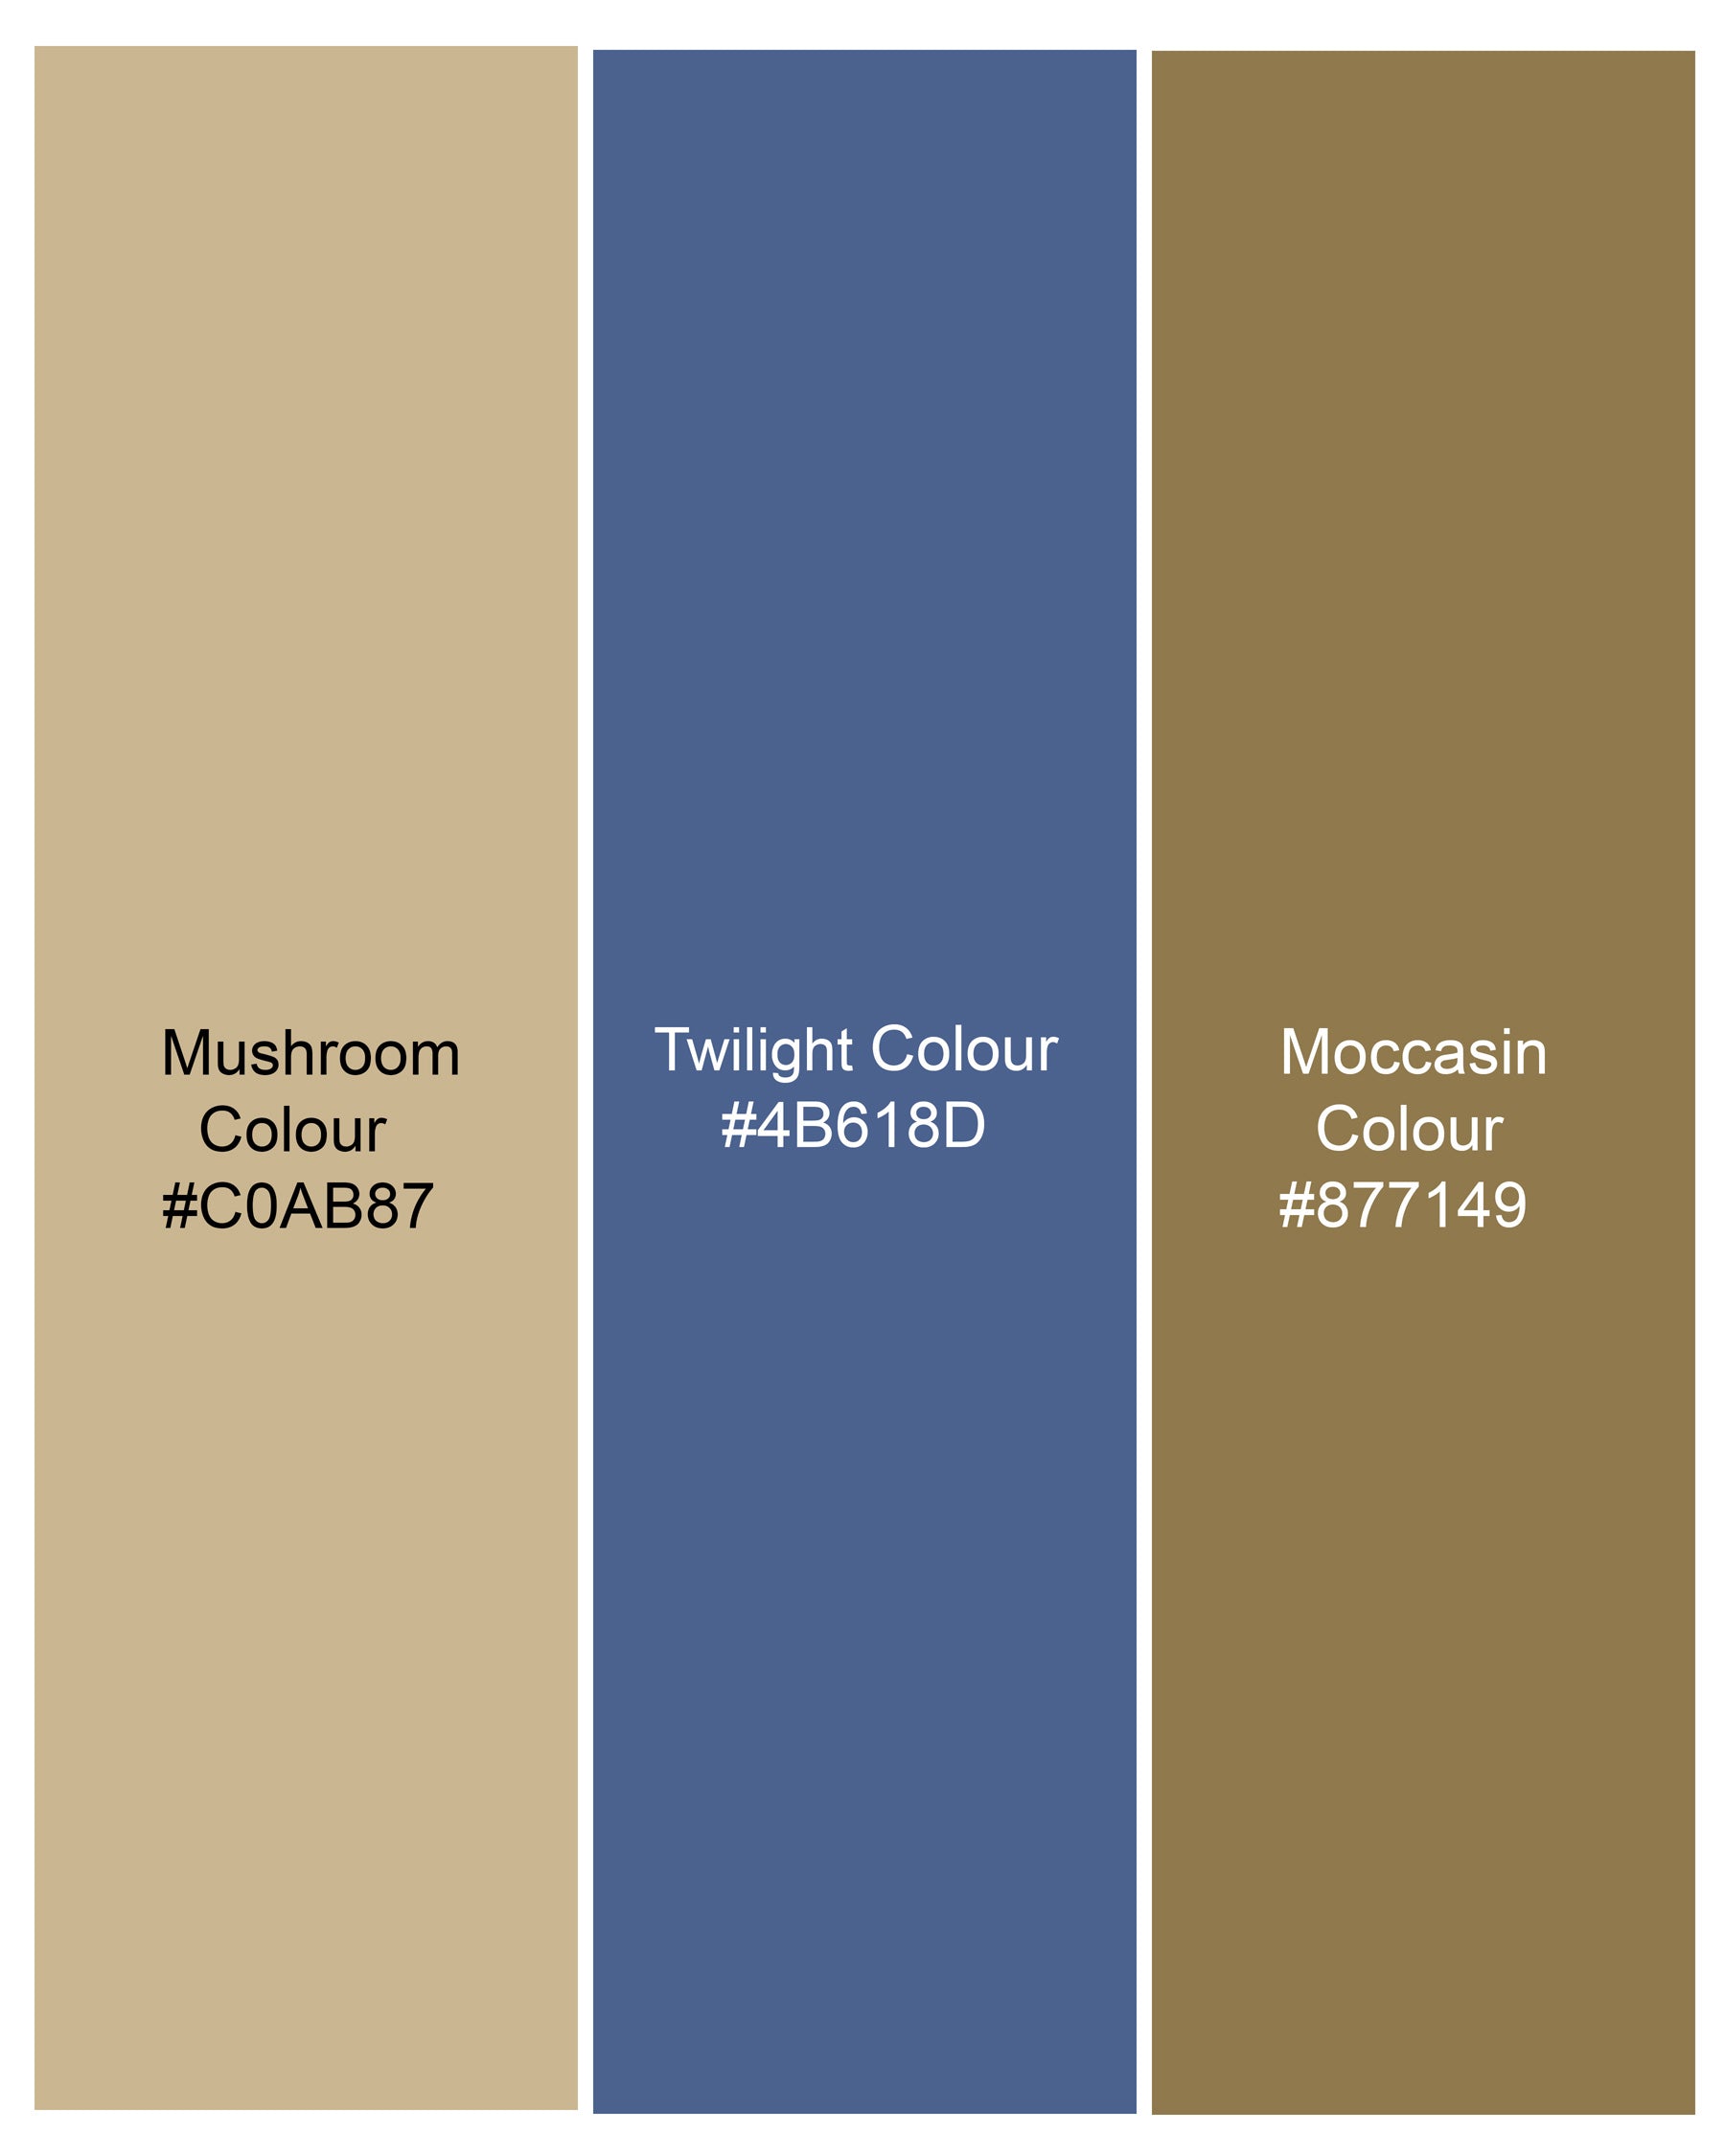 Mushroom Light Brown Checkered Bandhgala Blazer BL2139-BG-36, BL2139-BG-38, BL2139-BG-40, BL2139-BG-42, BL2139-BG-44, BL2139-BG-46, BL2139-BG-48, BL2139-BG-50, BL2139-BG-52, BL2139-BG-54, BL2139-BG-56, BL2139-BG-58, BL2139-BG-60